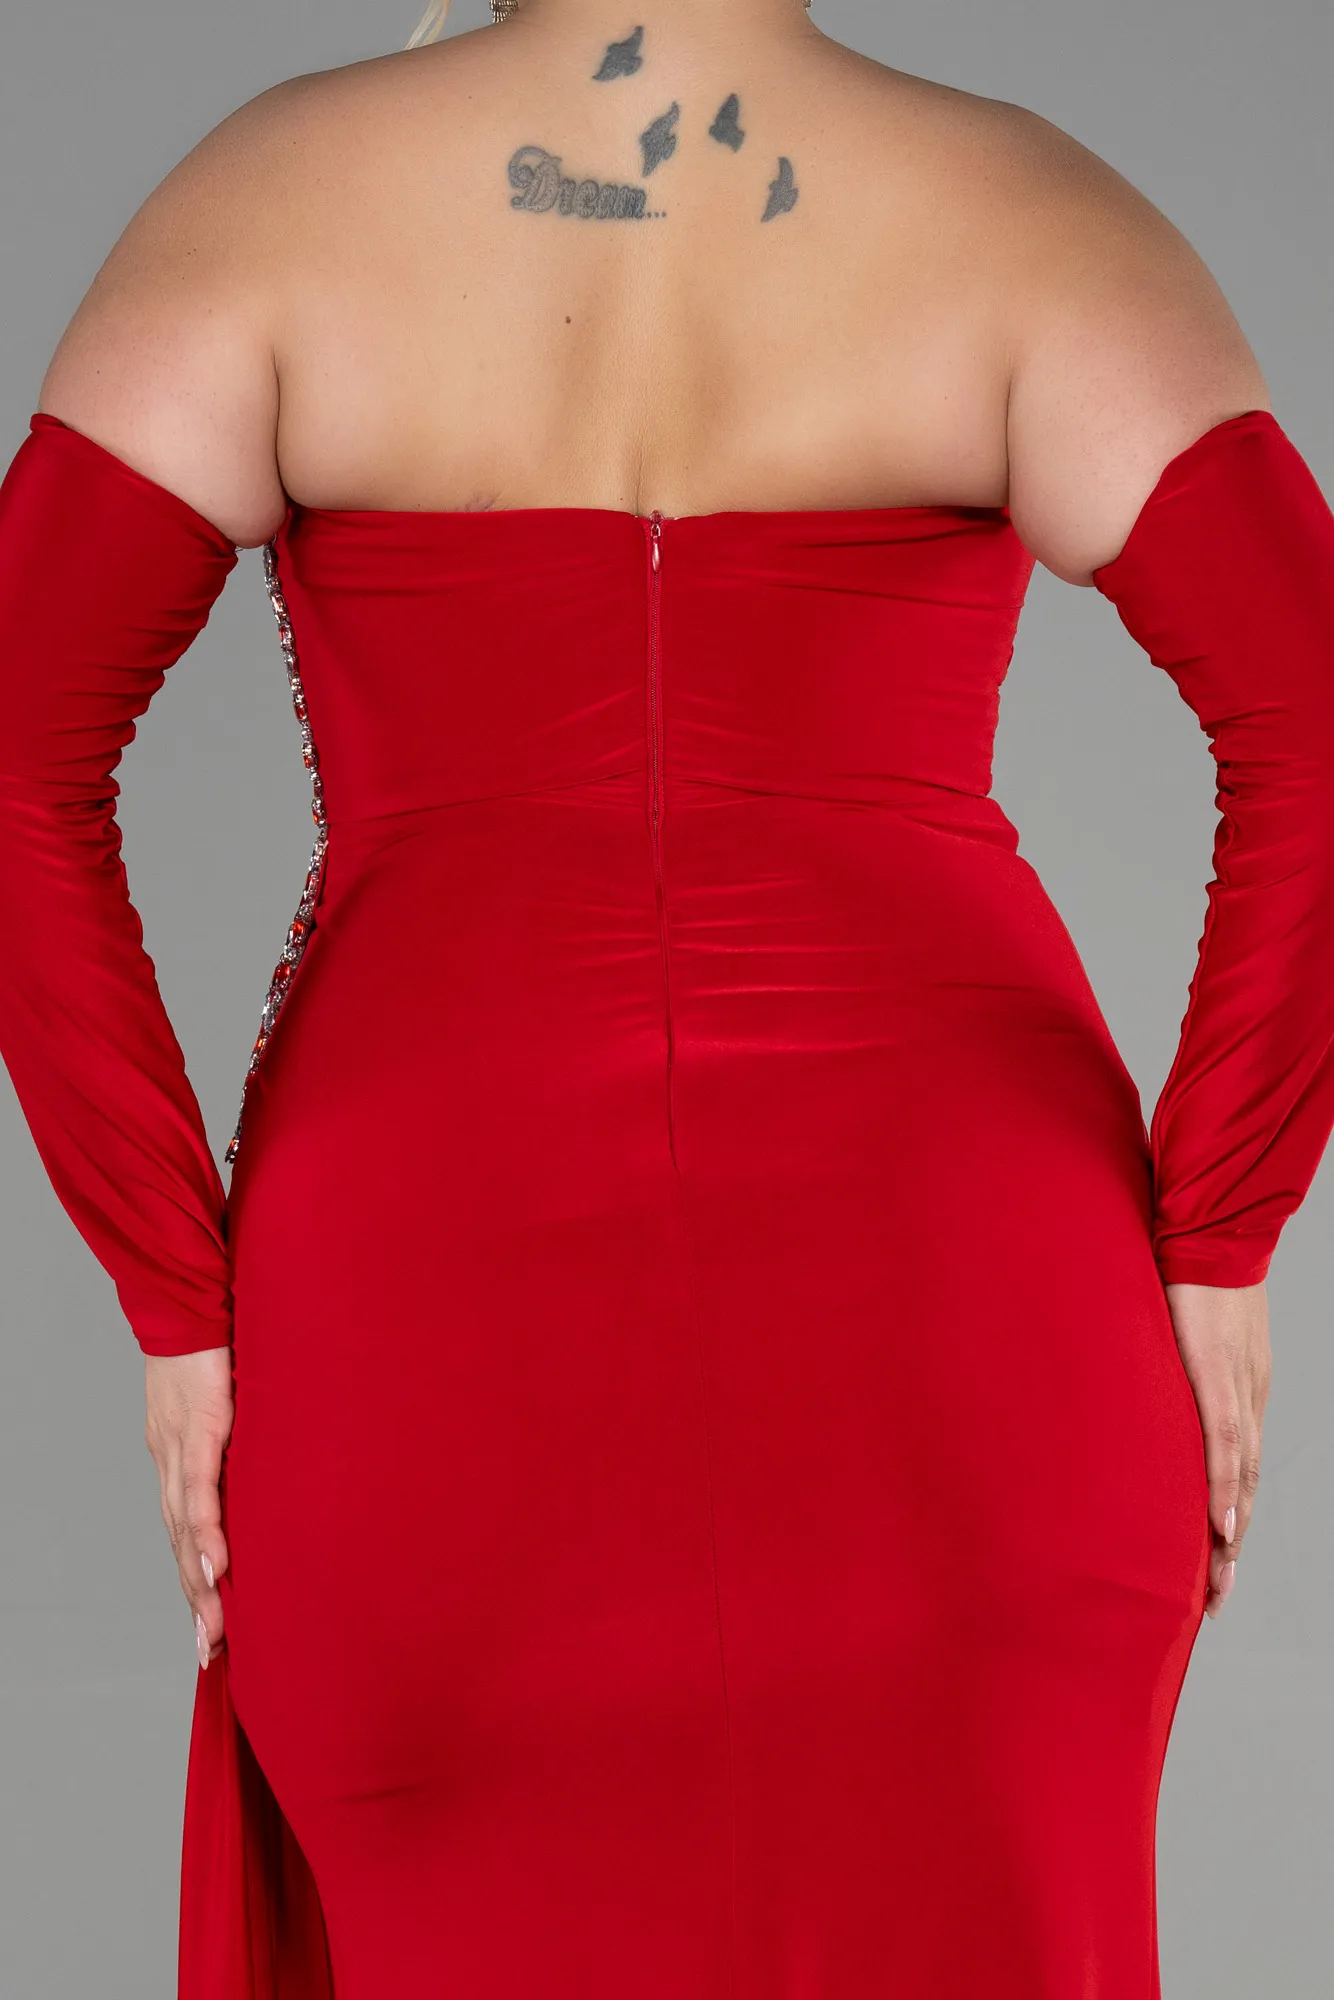 Red-Long Plus Size Evening Dress ABU3352